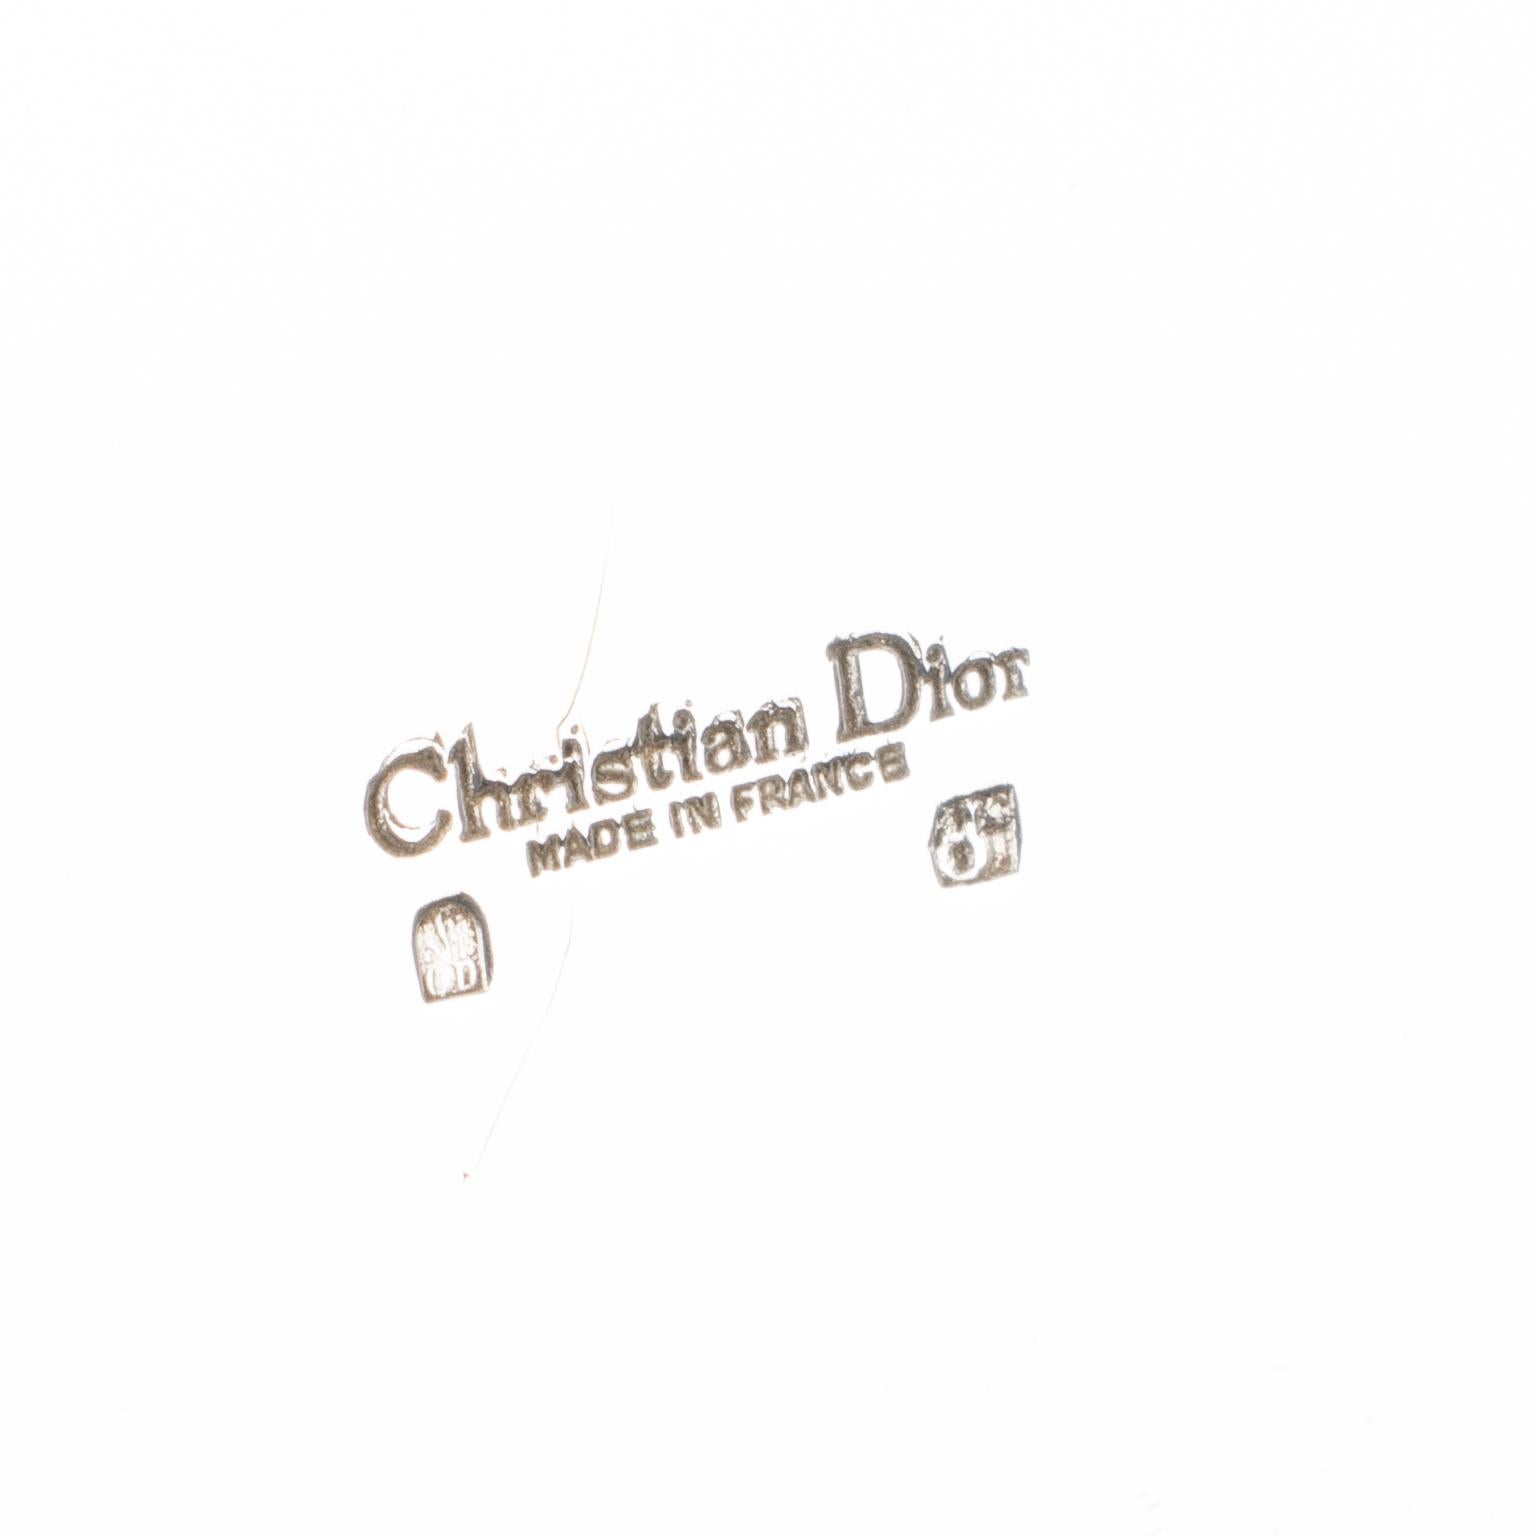 Christian Dior Paris Silver Plate Box with Quartz Stone Finial, 1970s For Sale 5